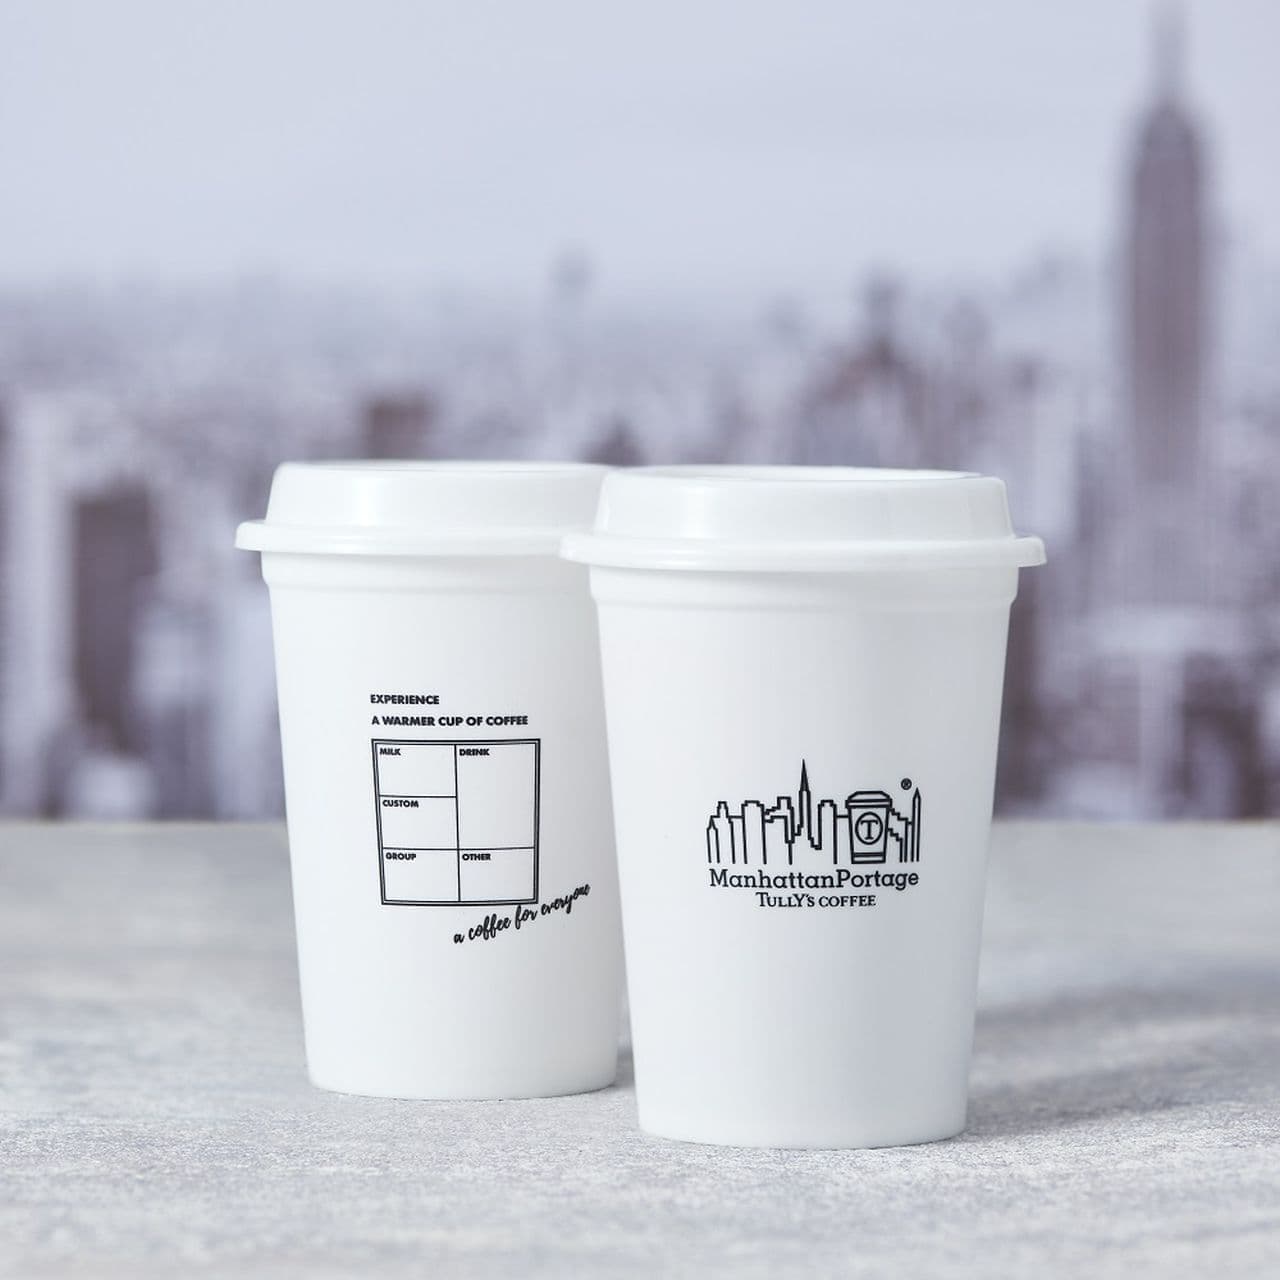 Tully's Coffee "Manhattan Portage" collaboration goods